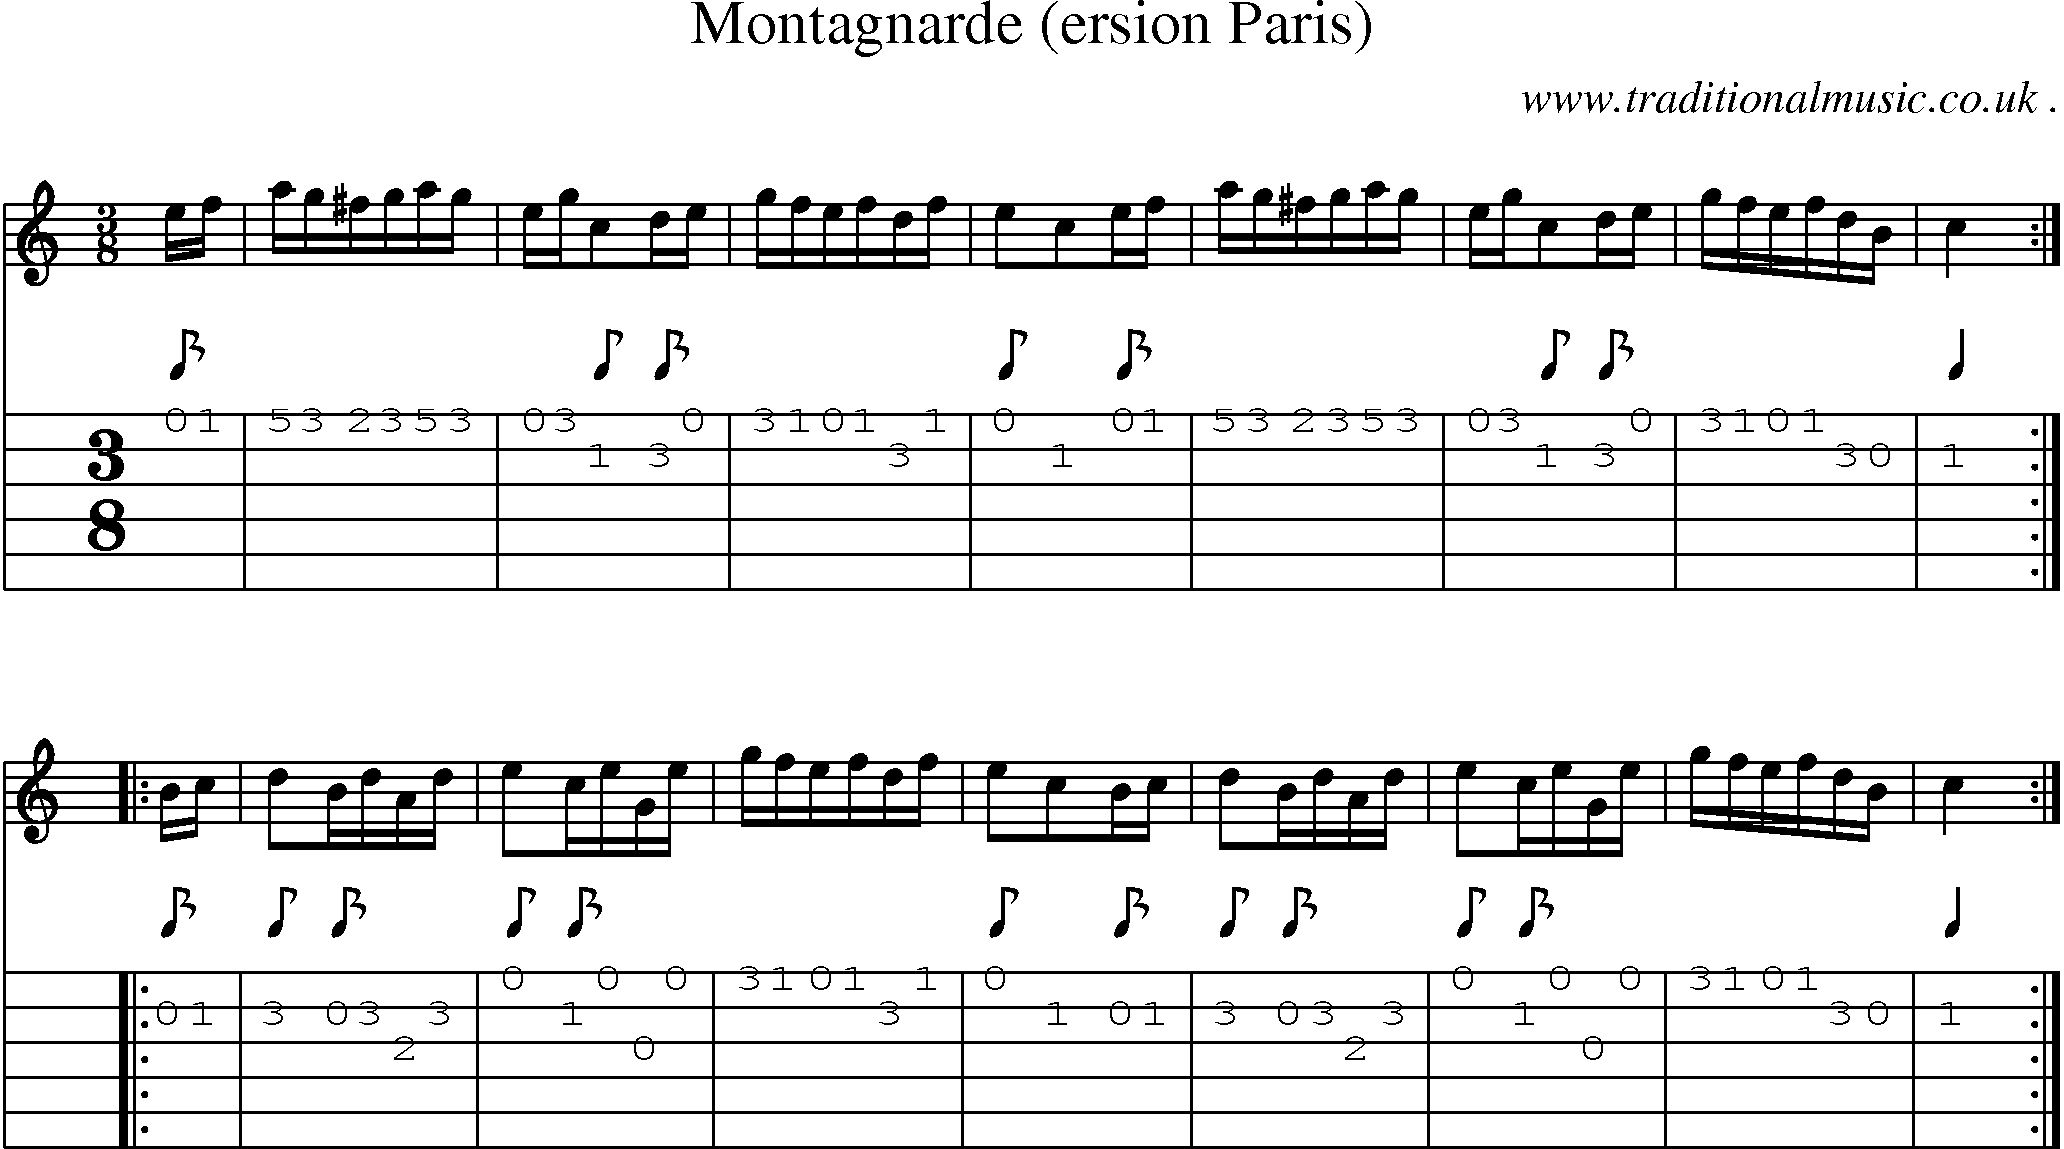 Sheet-Music and Guitar Tabs for Montagnarde (ersion Paris)